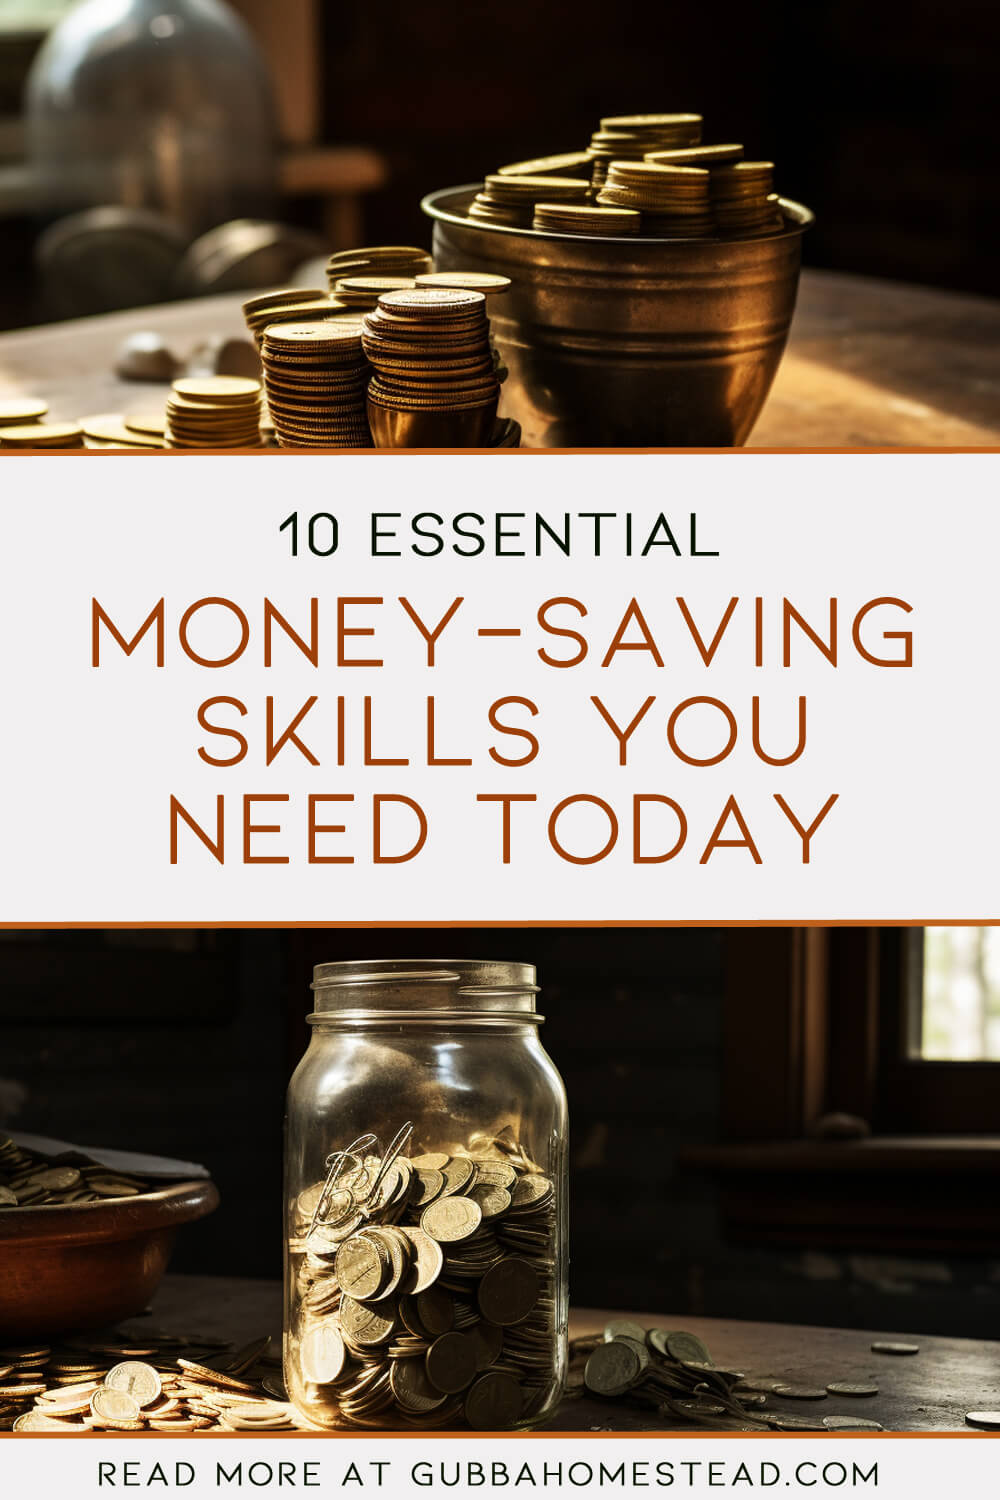 10 Essential Money-Saving Skills You Need